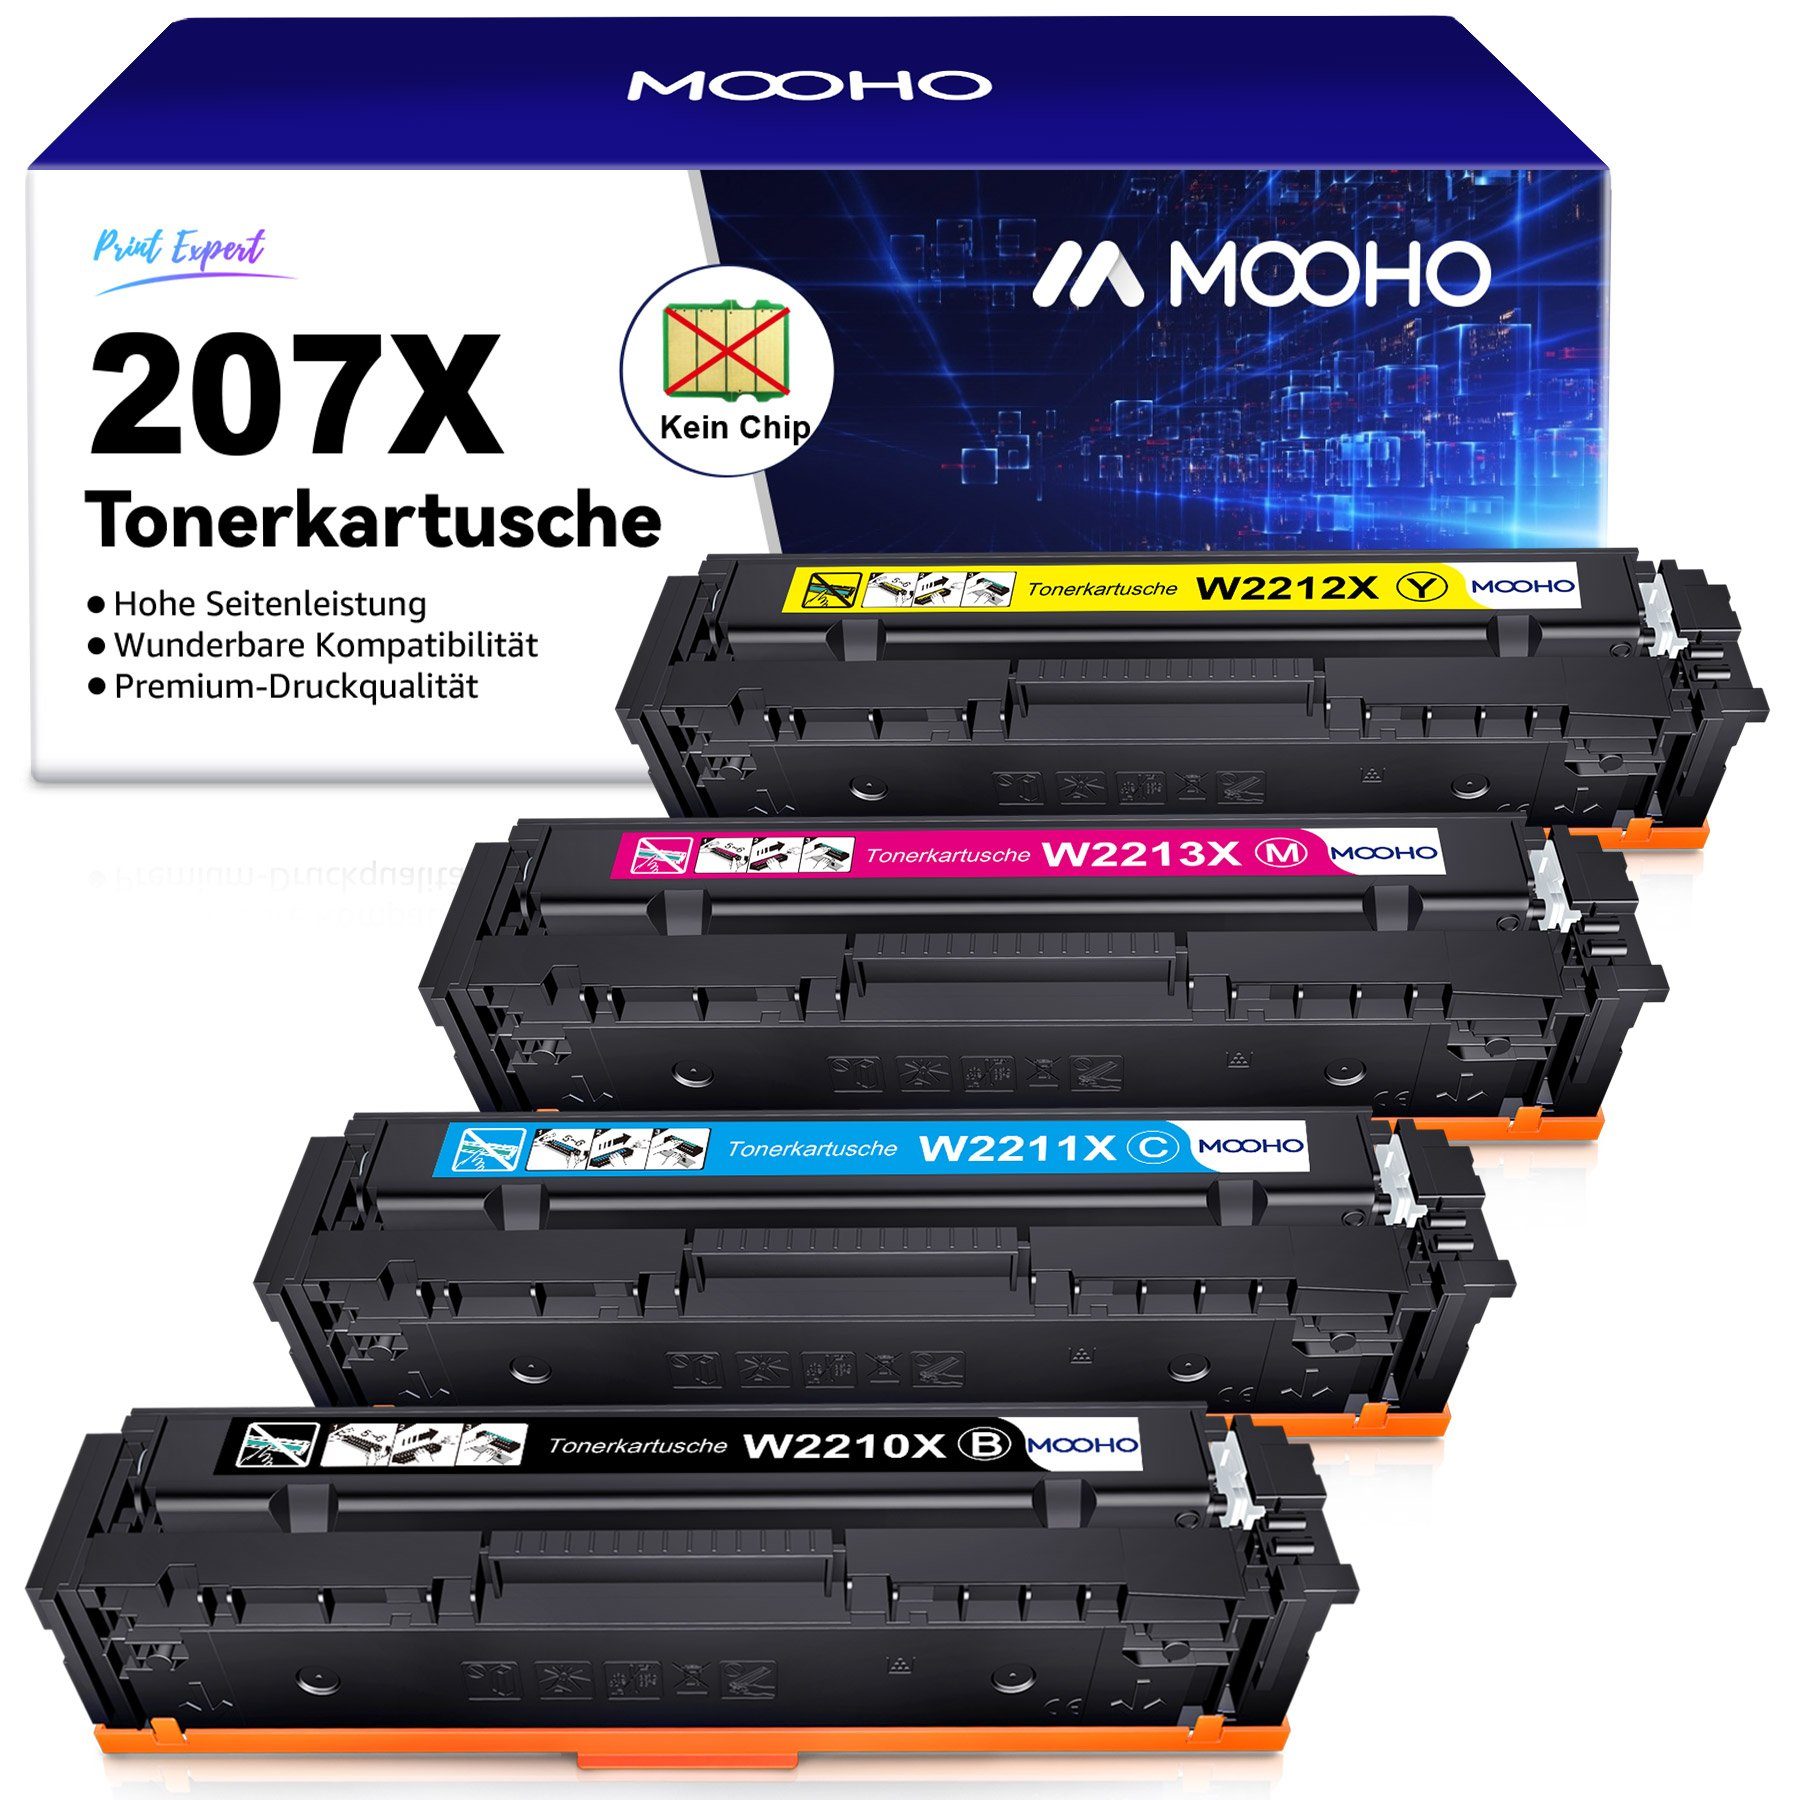 Color MOOHO M255dw für Laserjet A HP M255nw 207A Tonerkartusche (für ersetzt 207X Drucker) 207 Pro W2211A W2210A HP W2212A, X